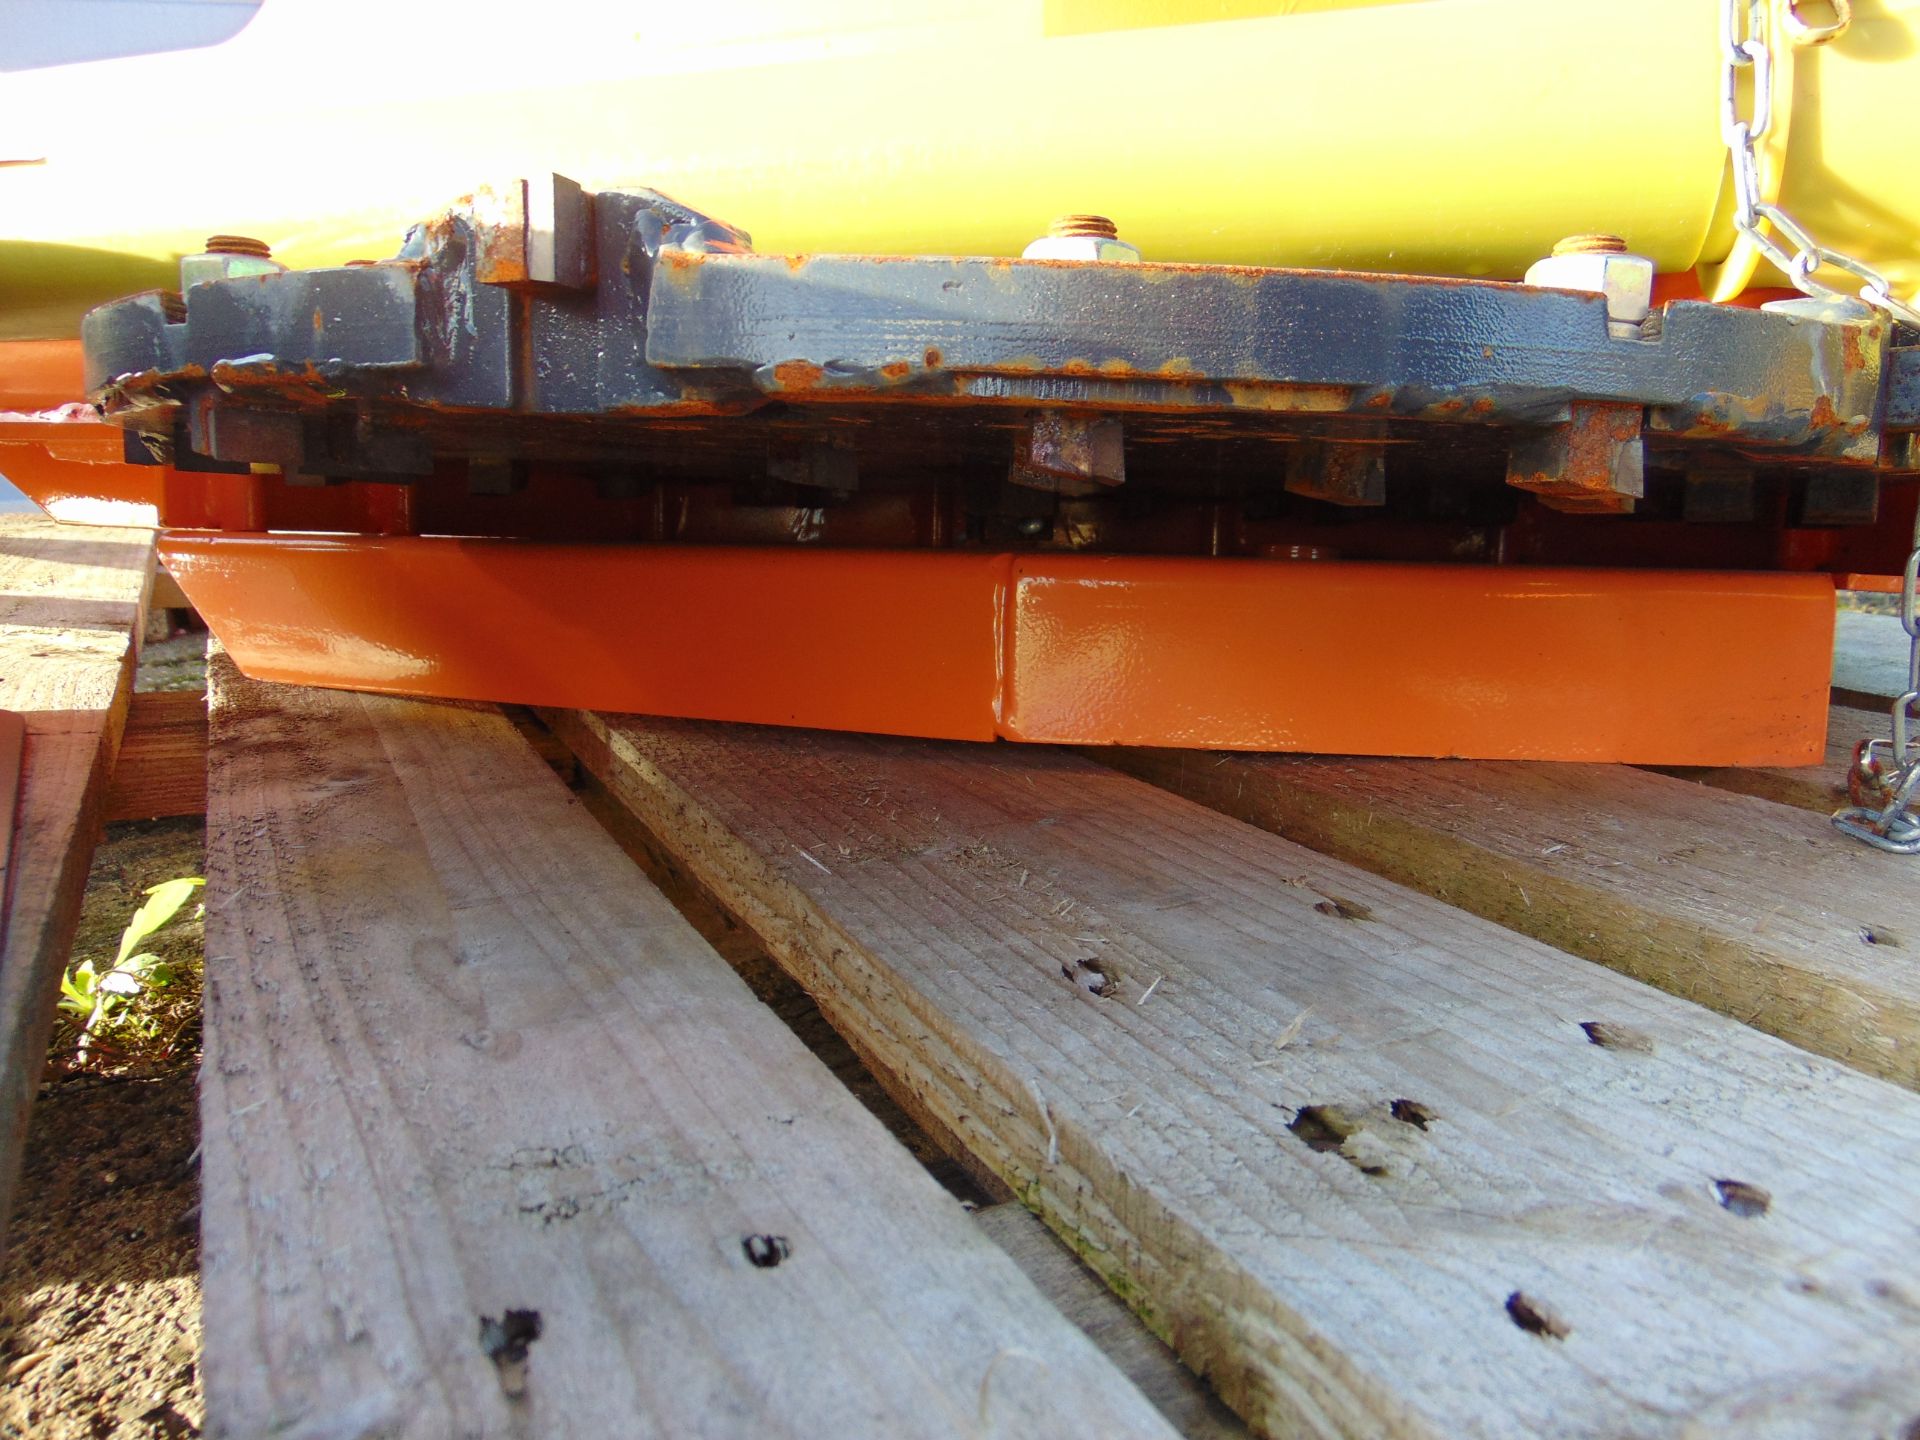 New Unused Hardlife SG24 3-Point Linkage Stump Grinder w /PTO Shaft as shown - Image 9 of 14